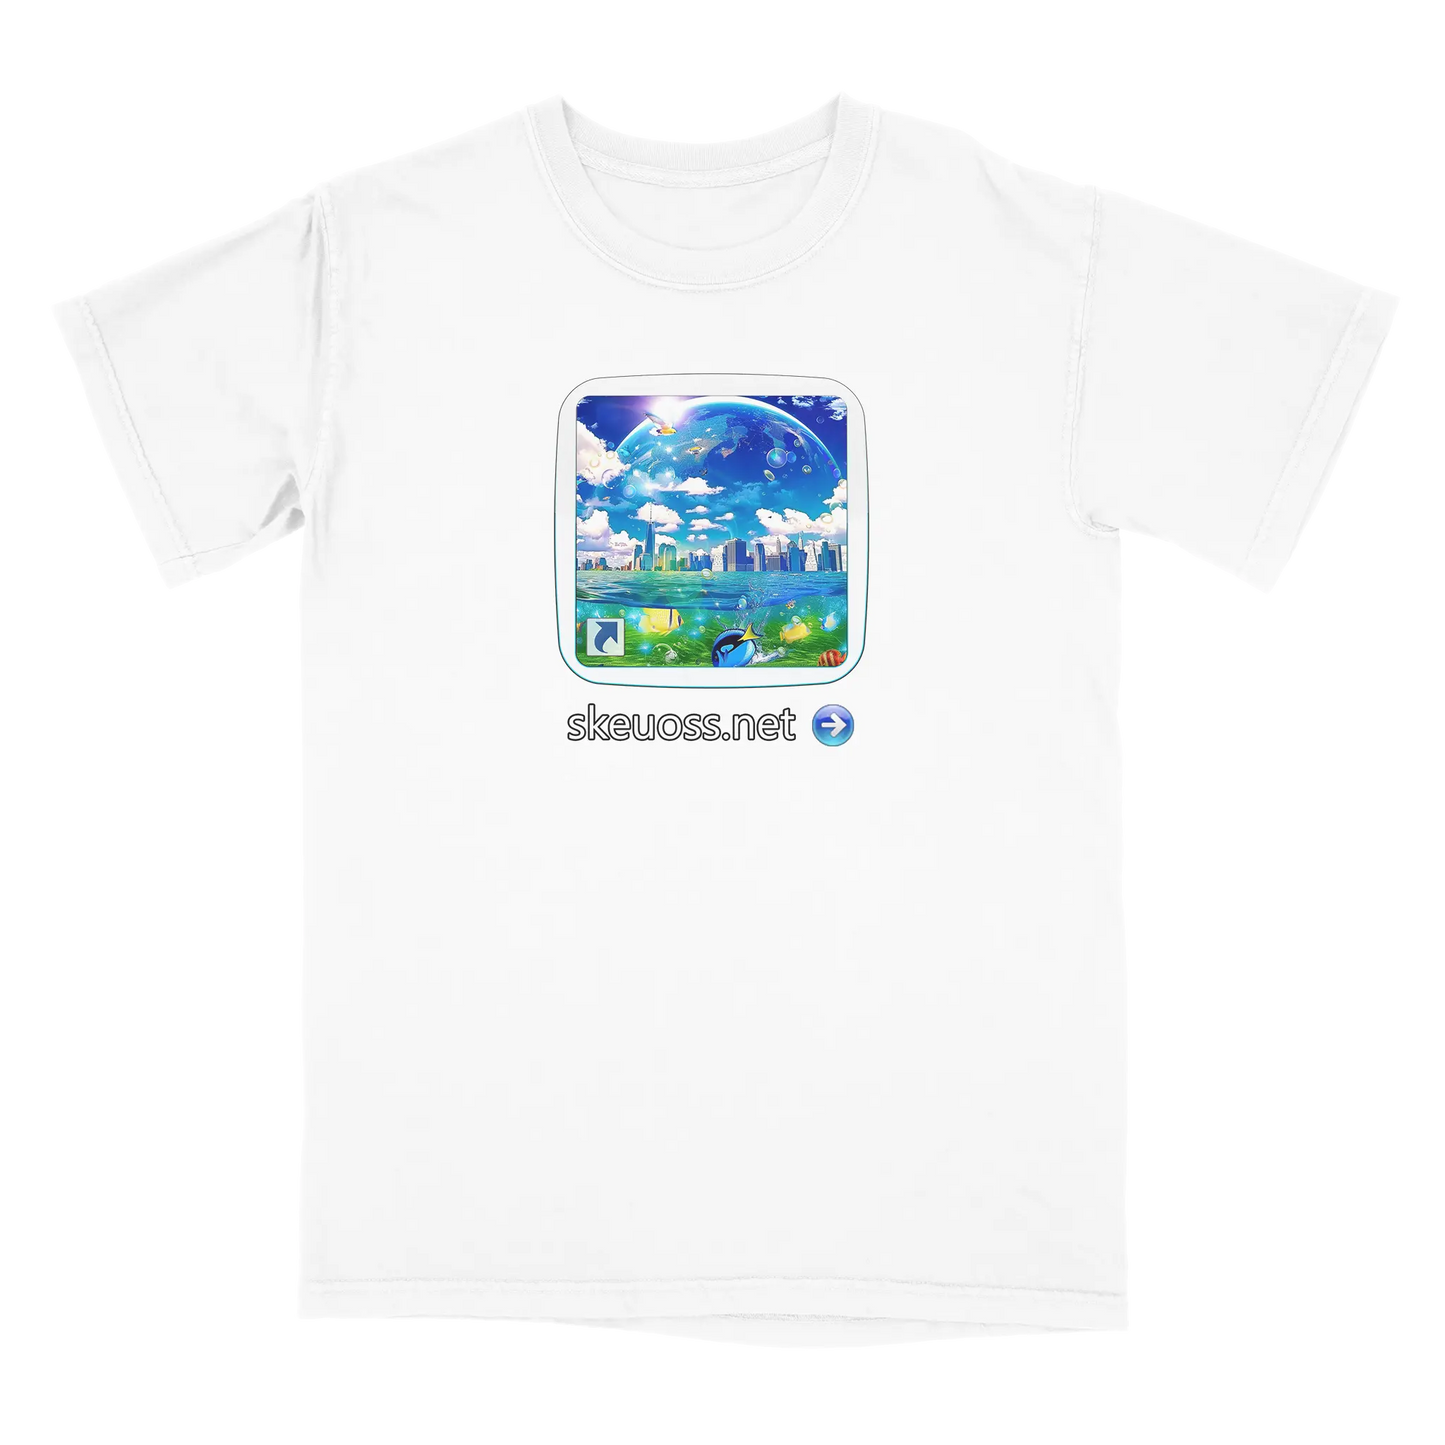 Frutiger Aero T-shirt - User Login Collection - User 220